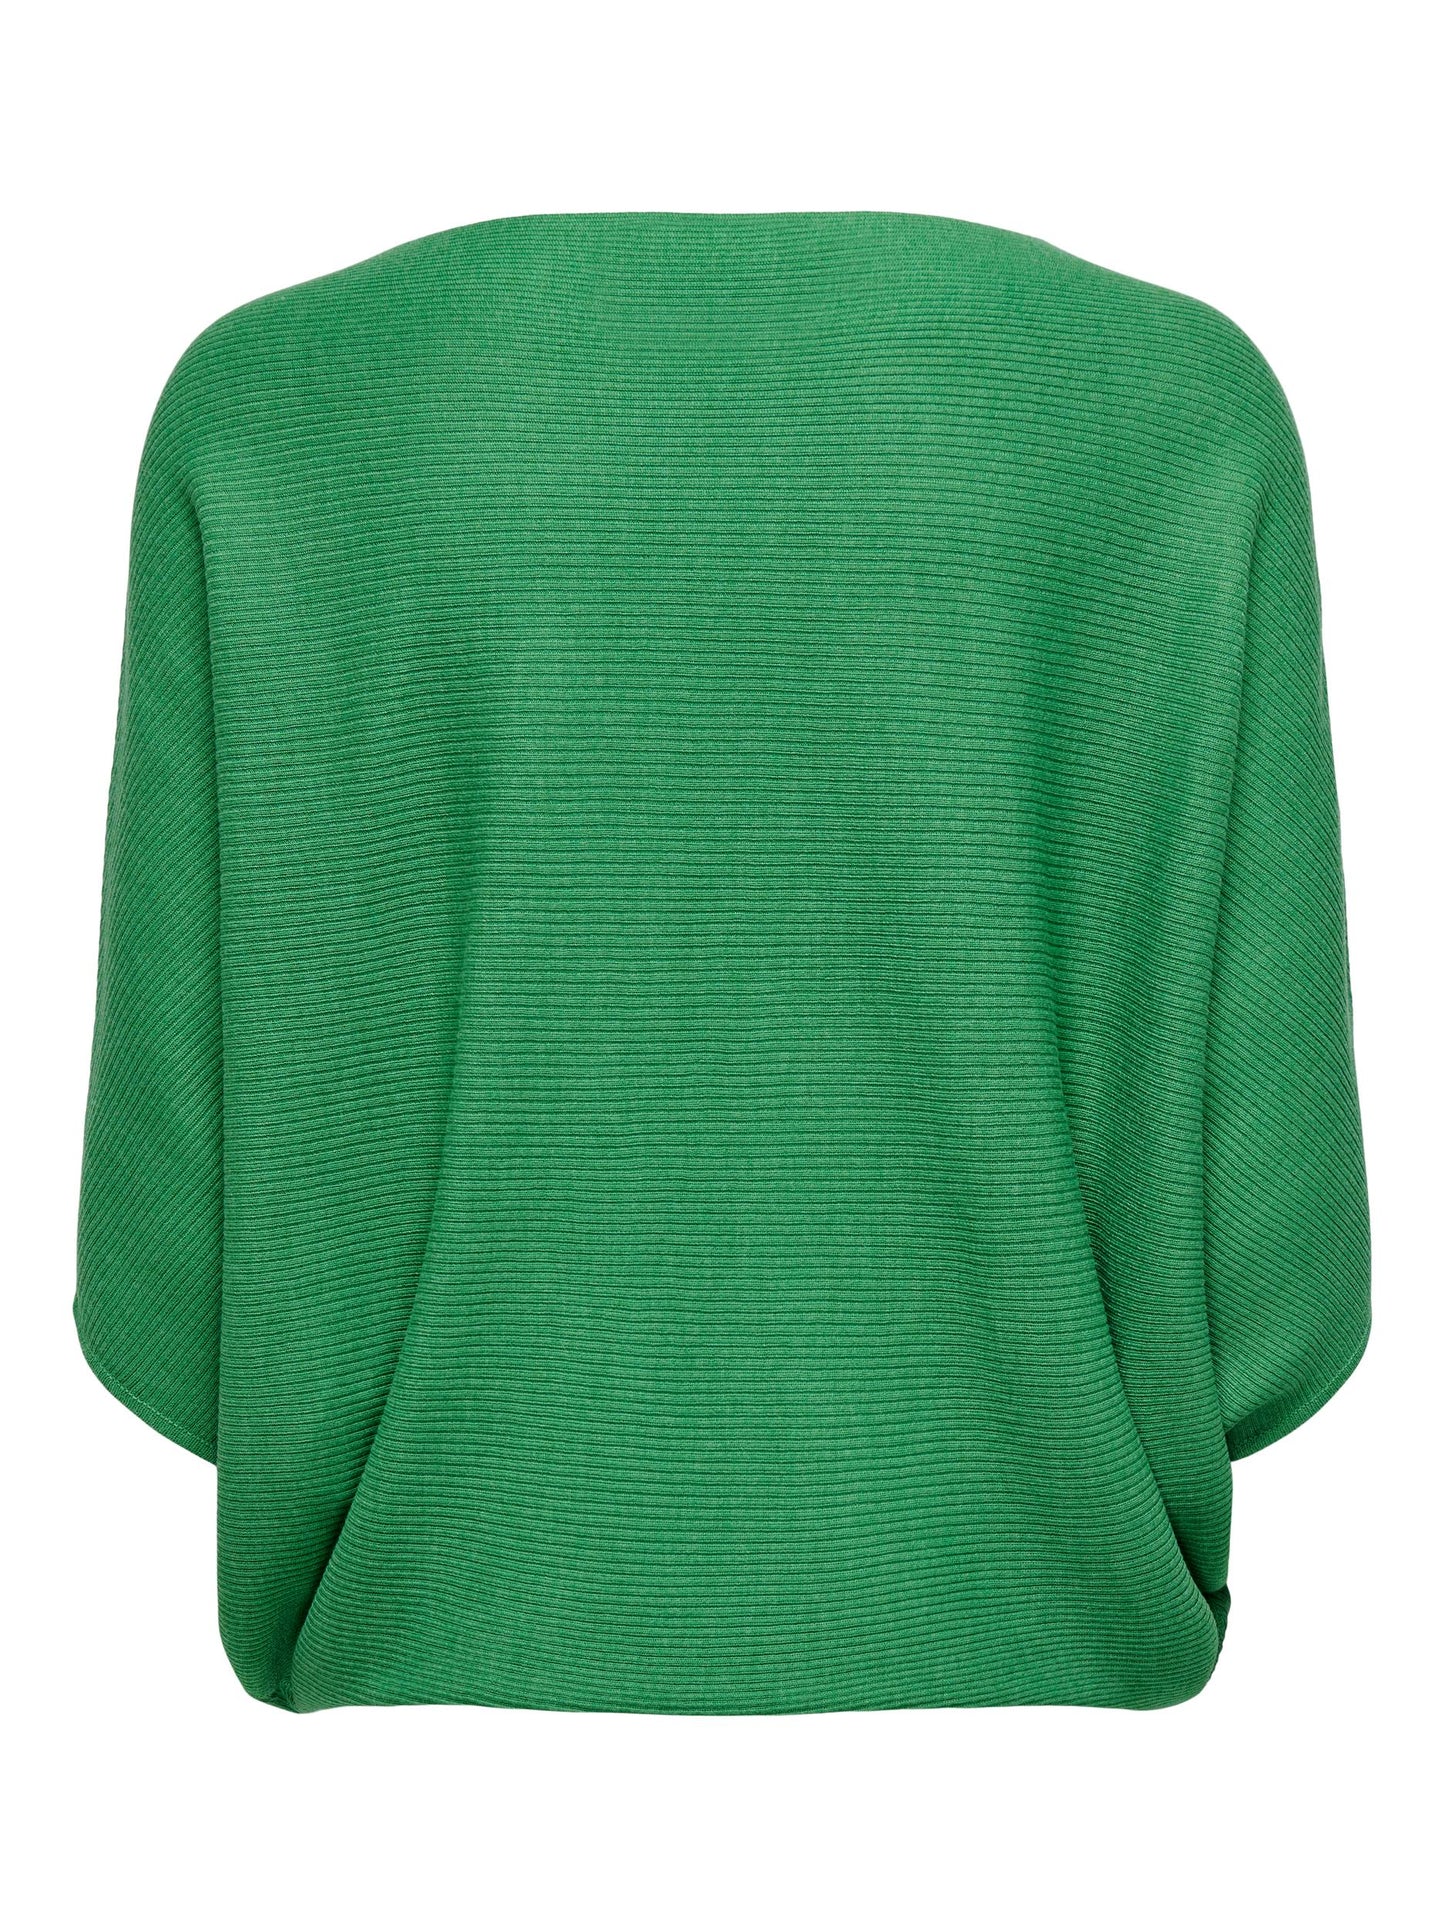 Green batwing jumper